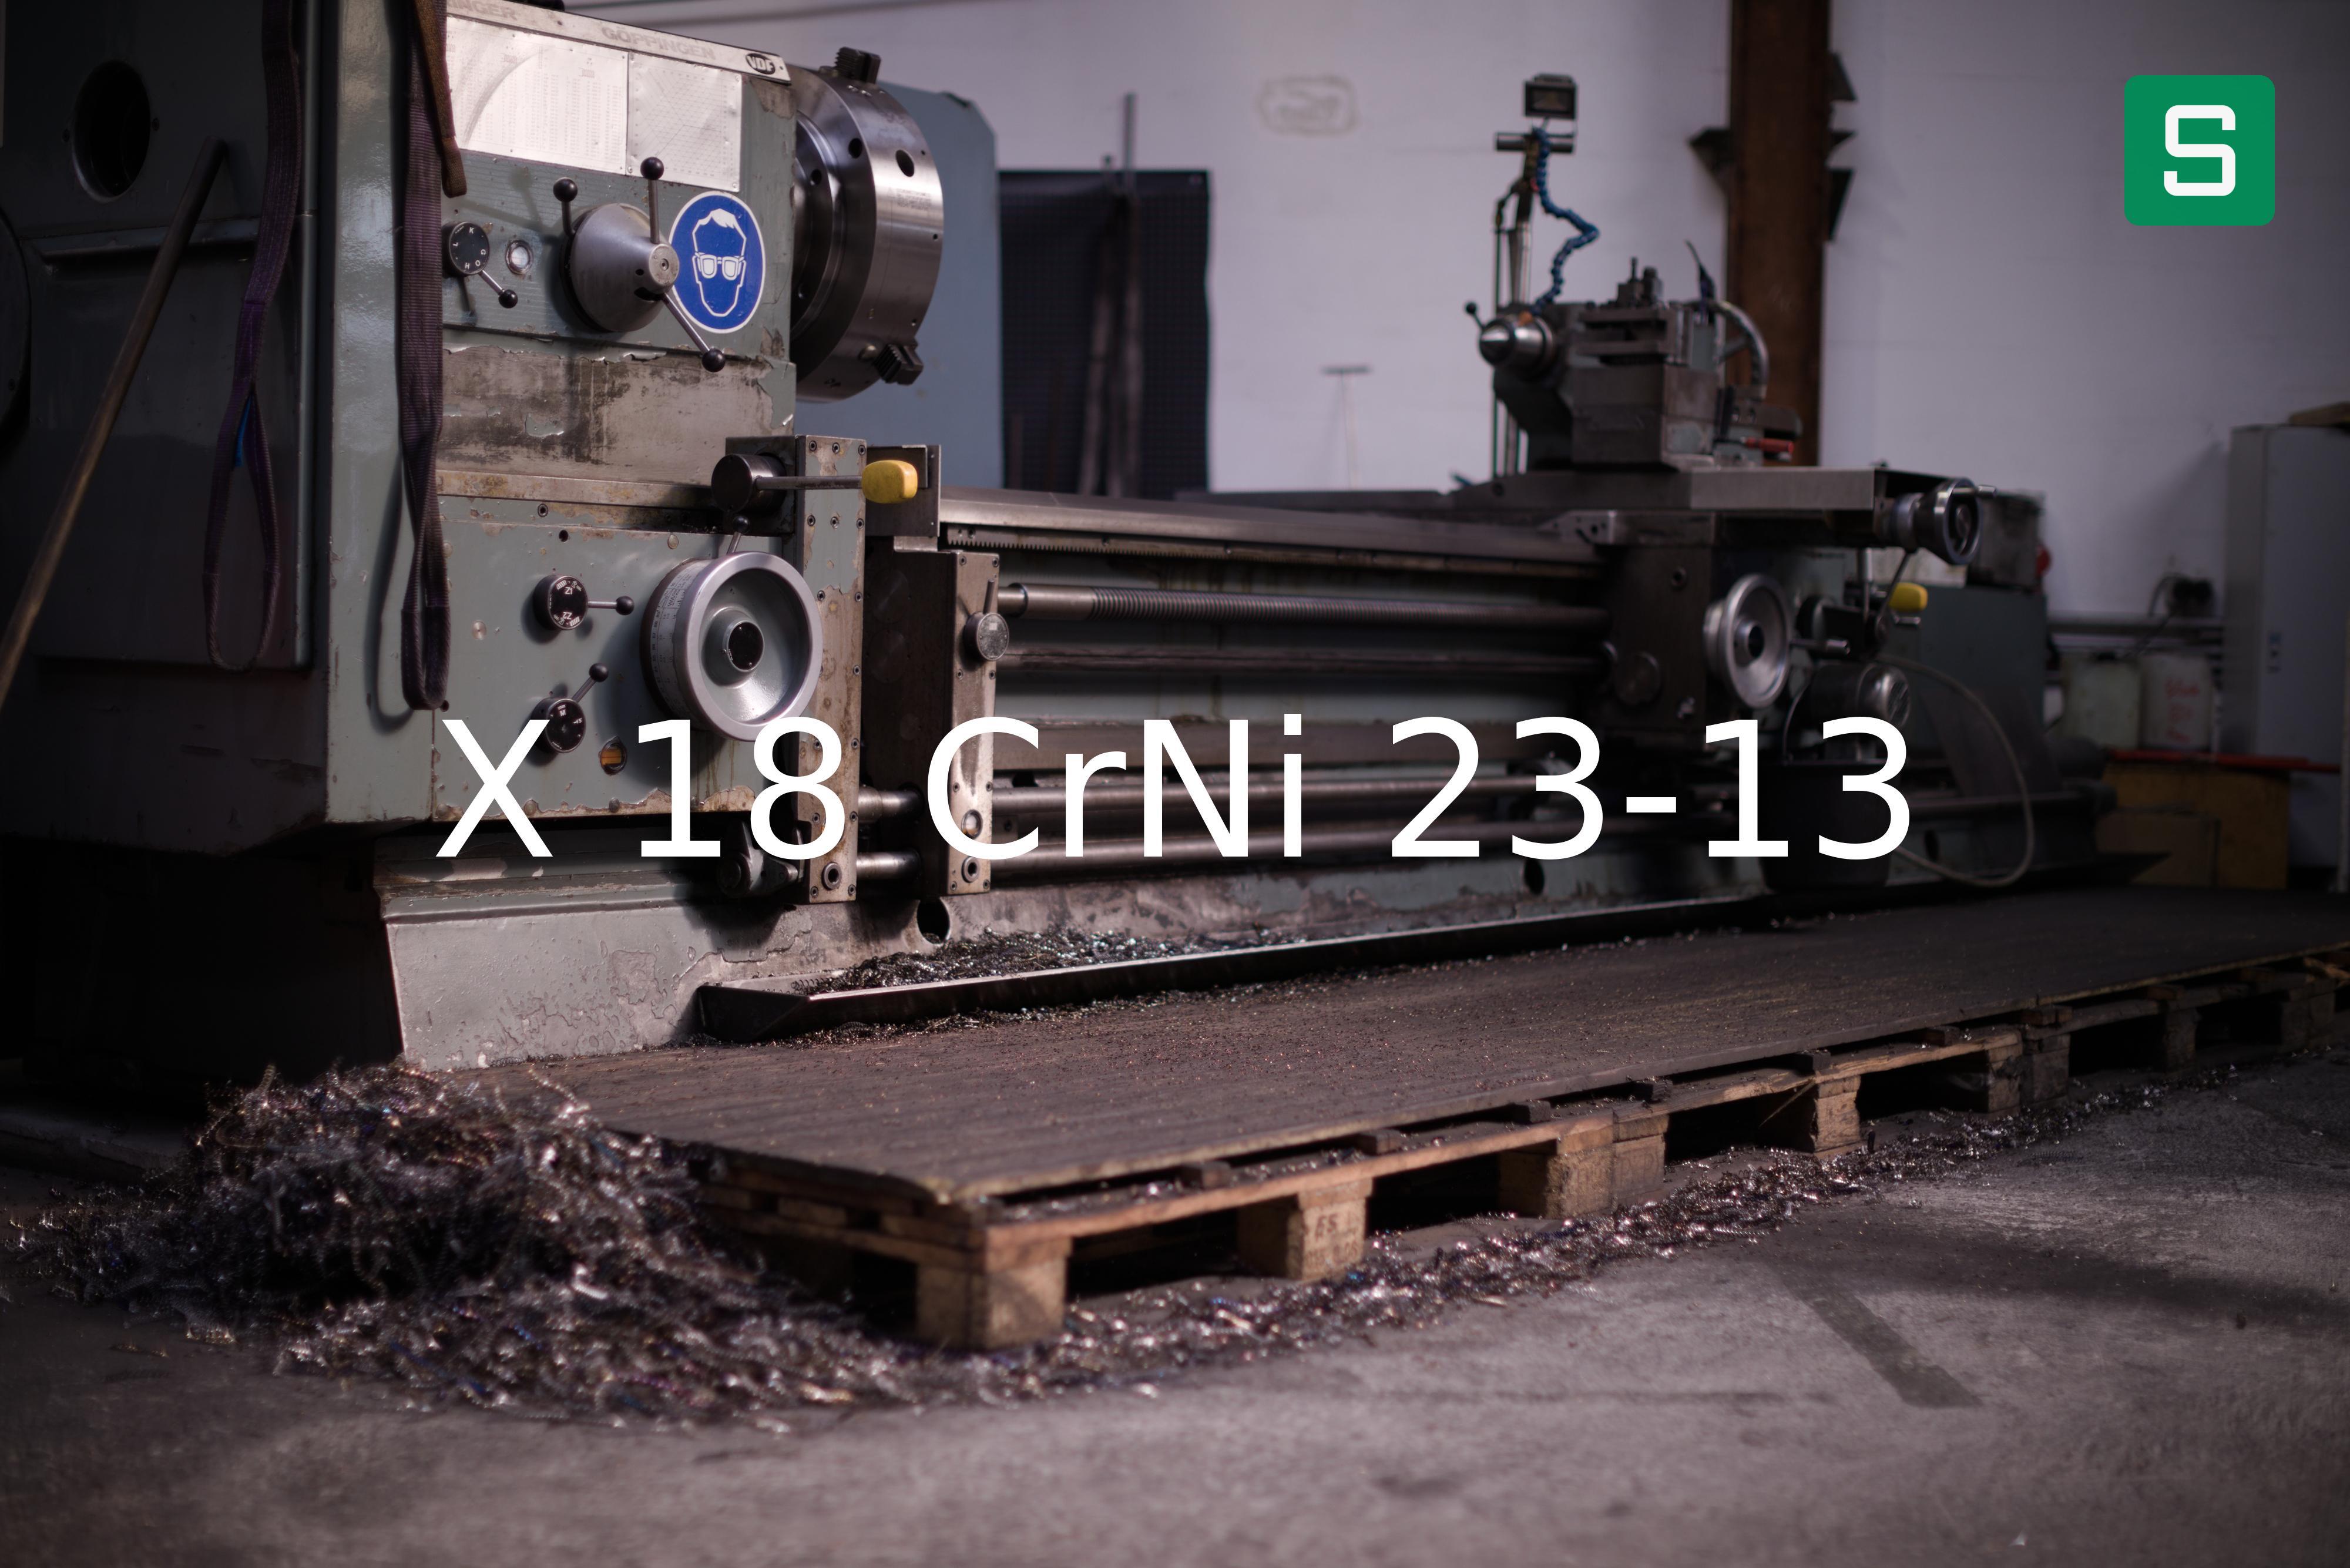 Steel Material: X 18 CrNi 23-13